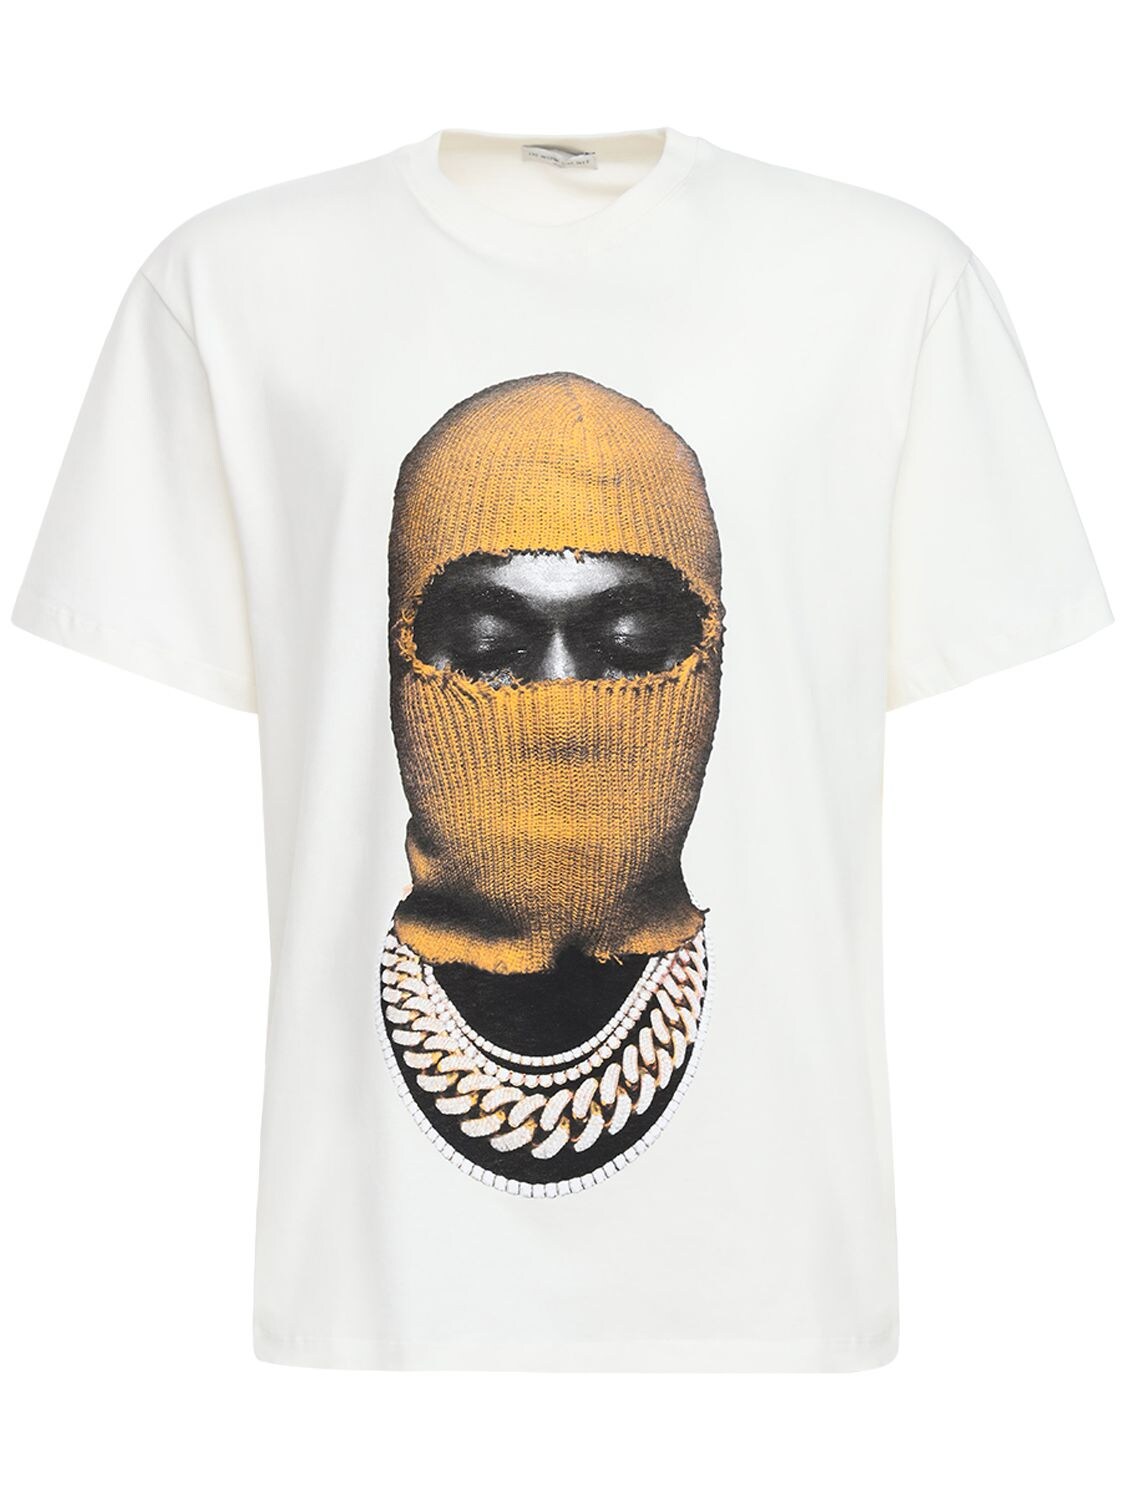 T-shirt En Coton Imprimé Masque - IH NOM UH NIT - Modalova